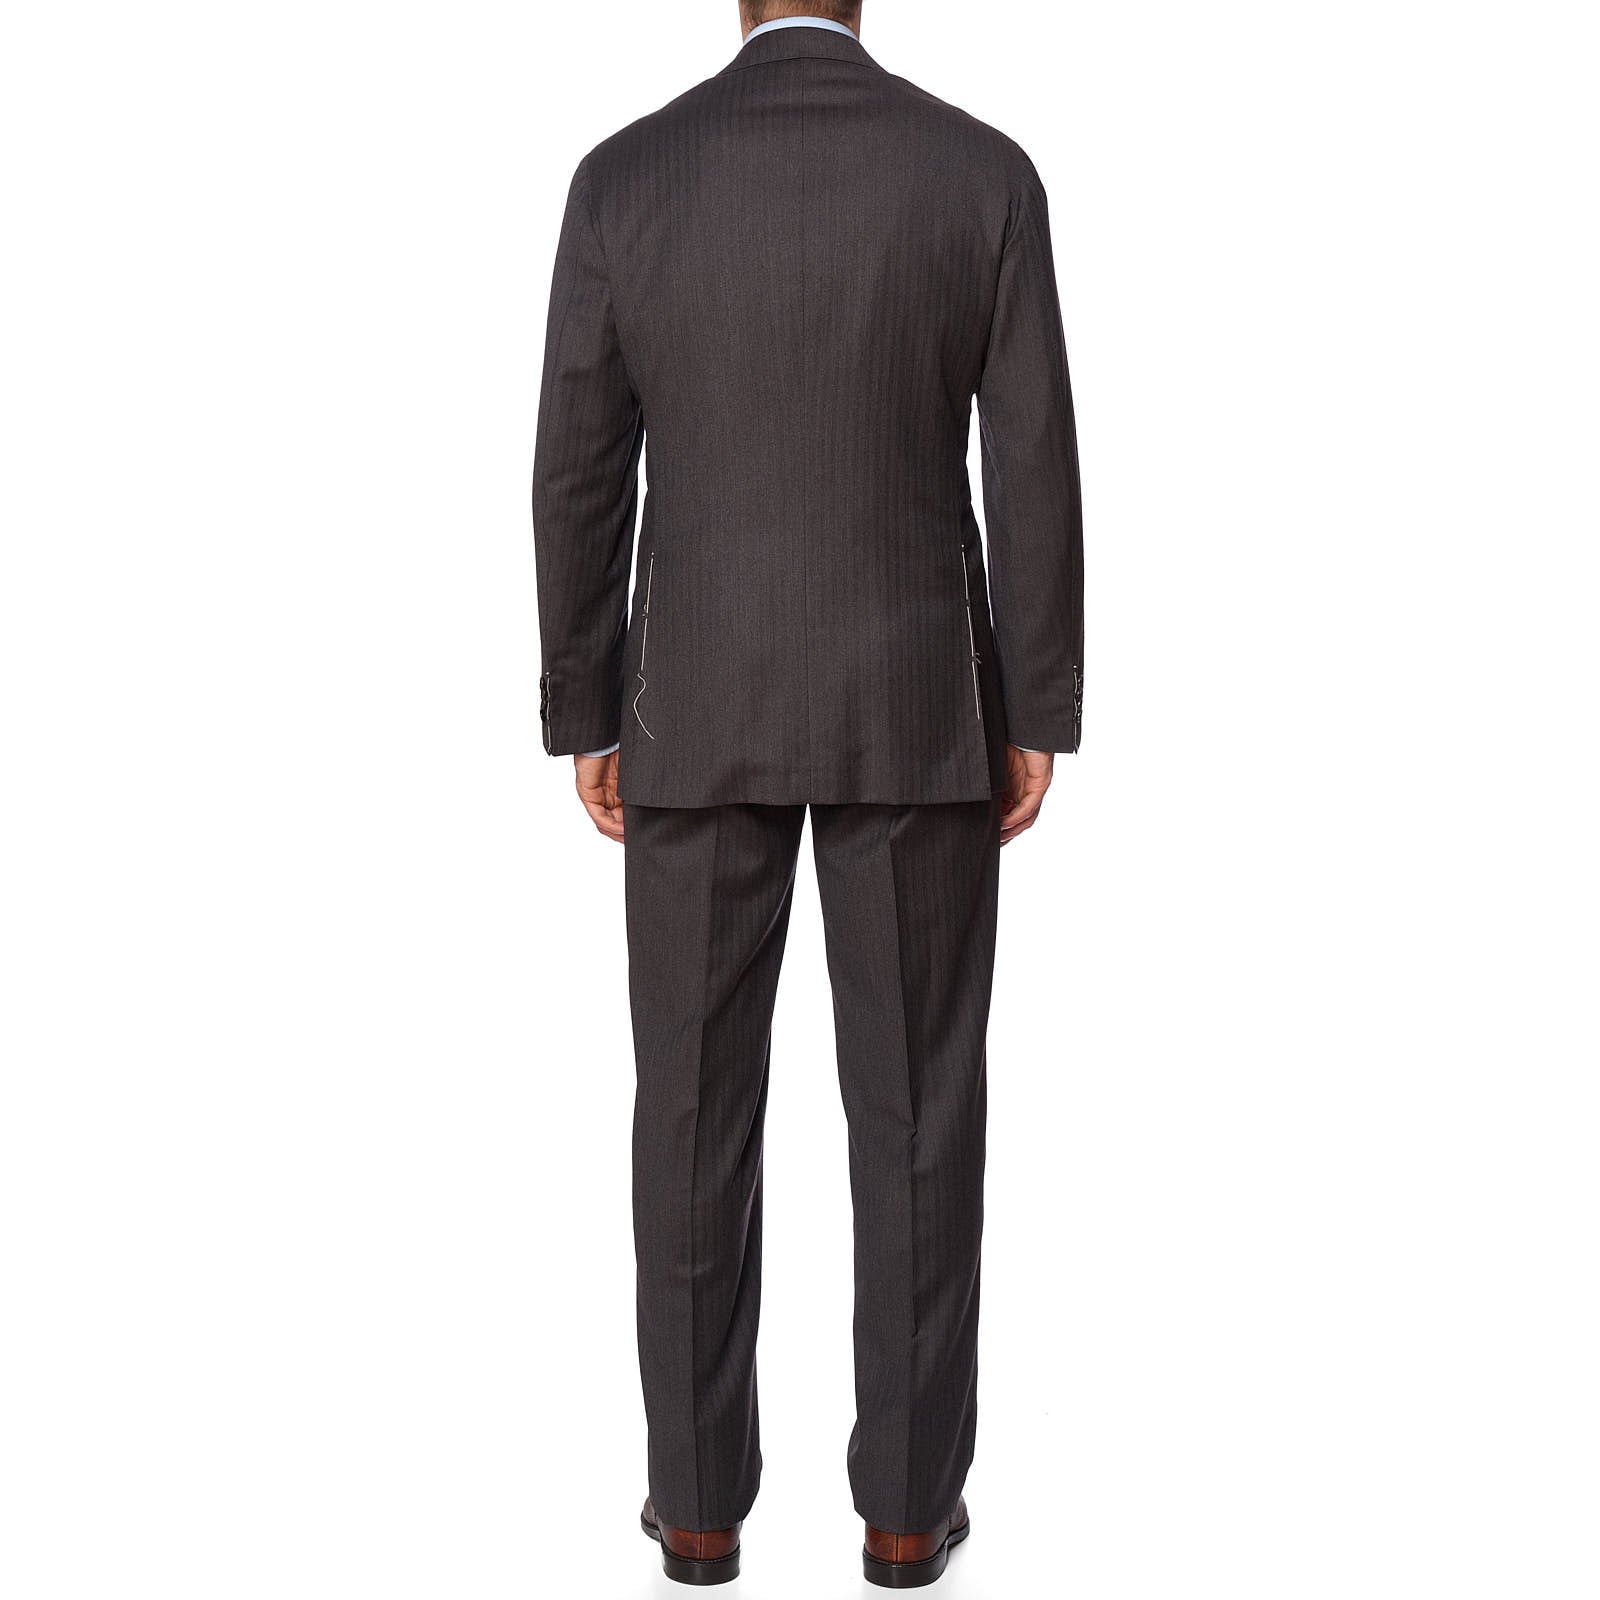 SARTORIA PARTENOPEA for VANNUCCI Brown Herringbone Wool Super 150's Handmade Suit EU 54 NEW US 44